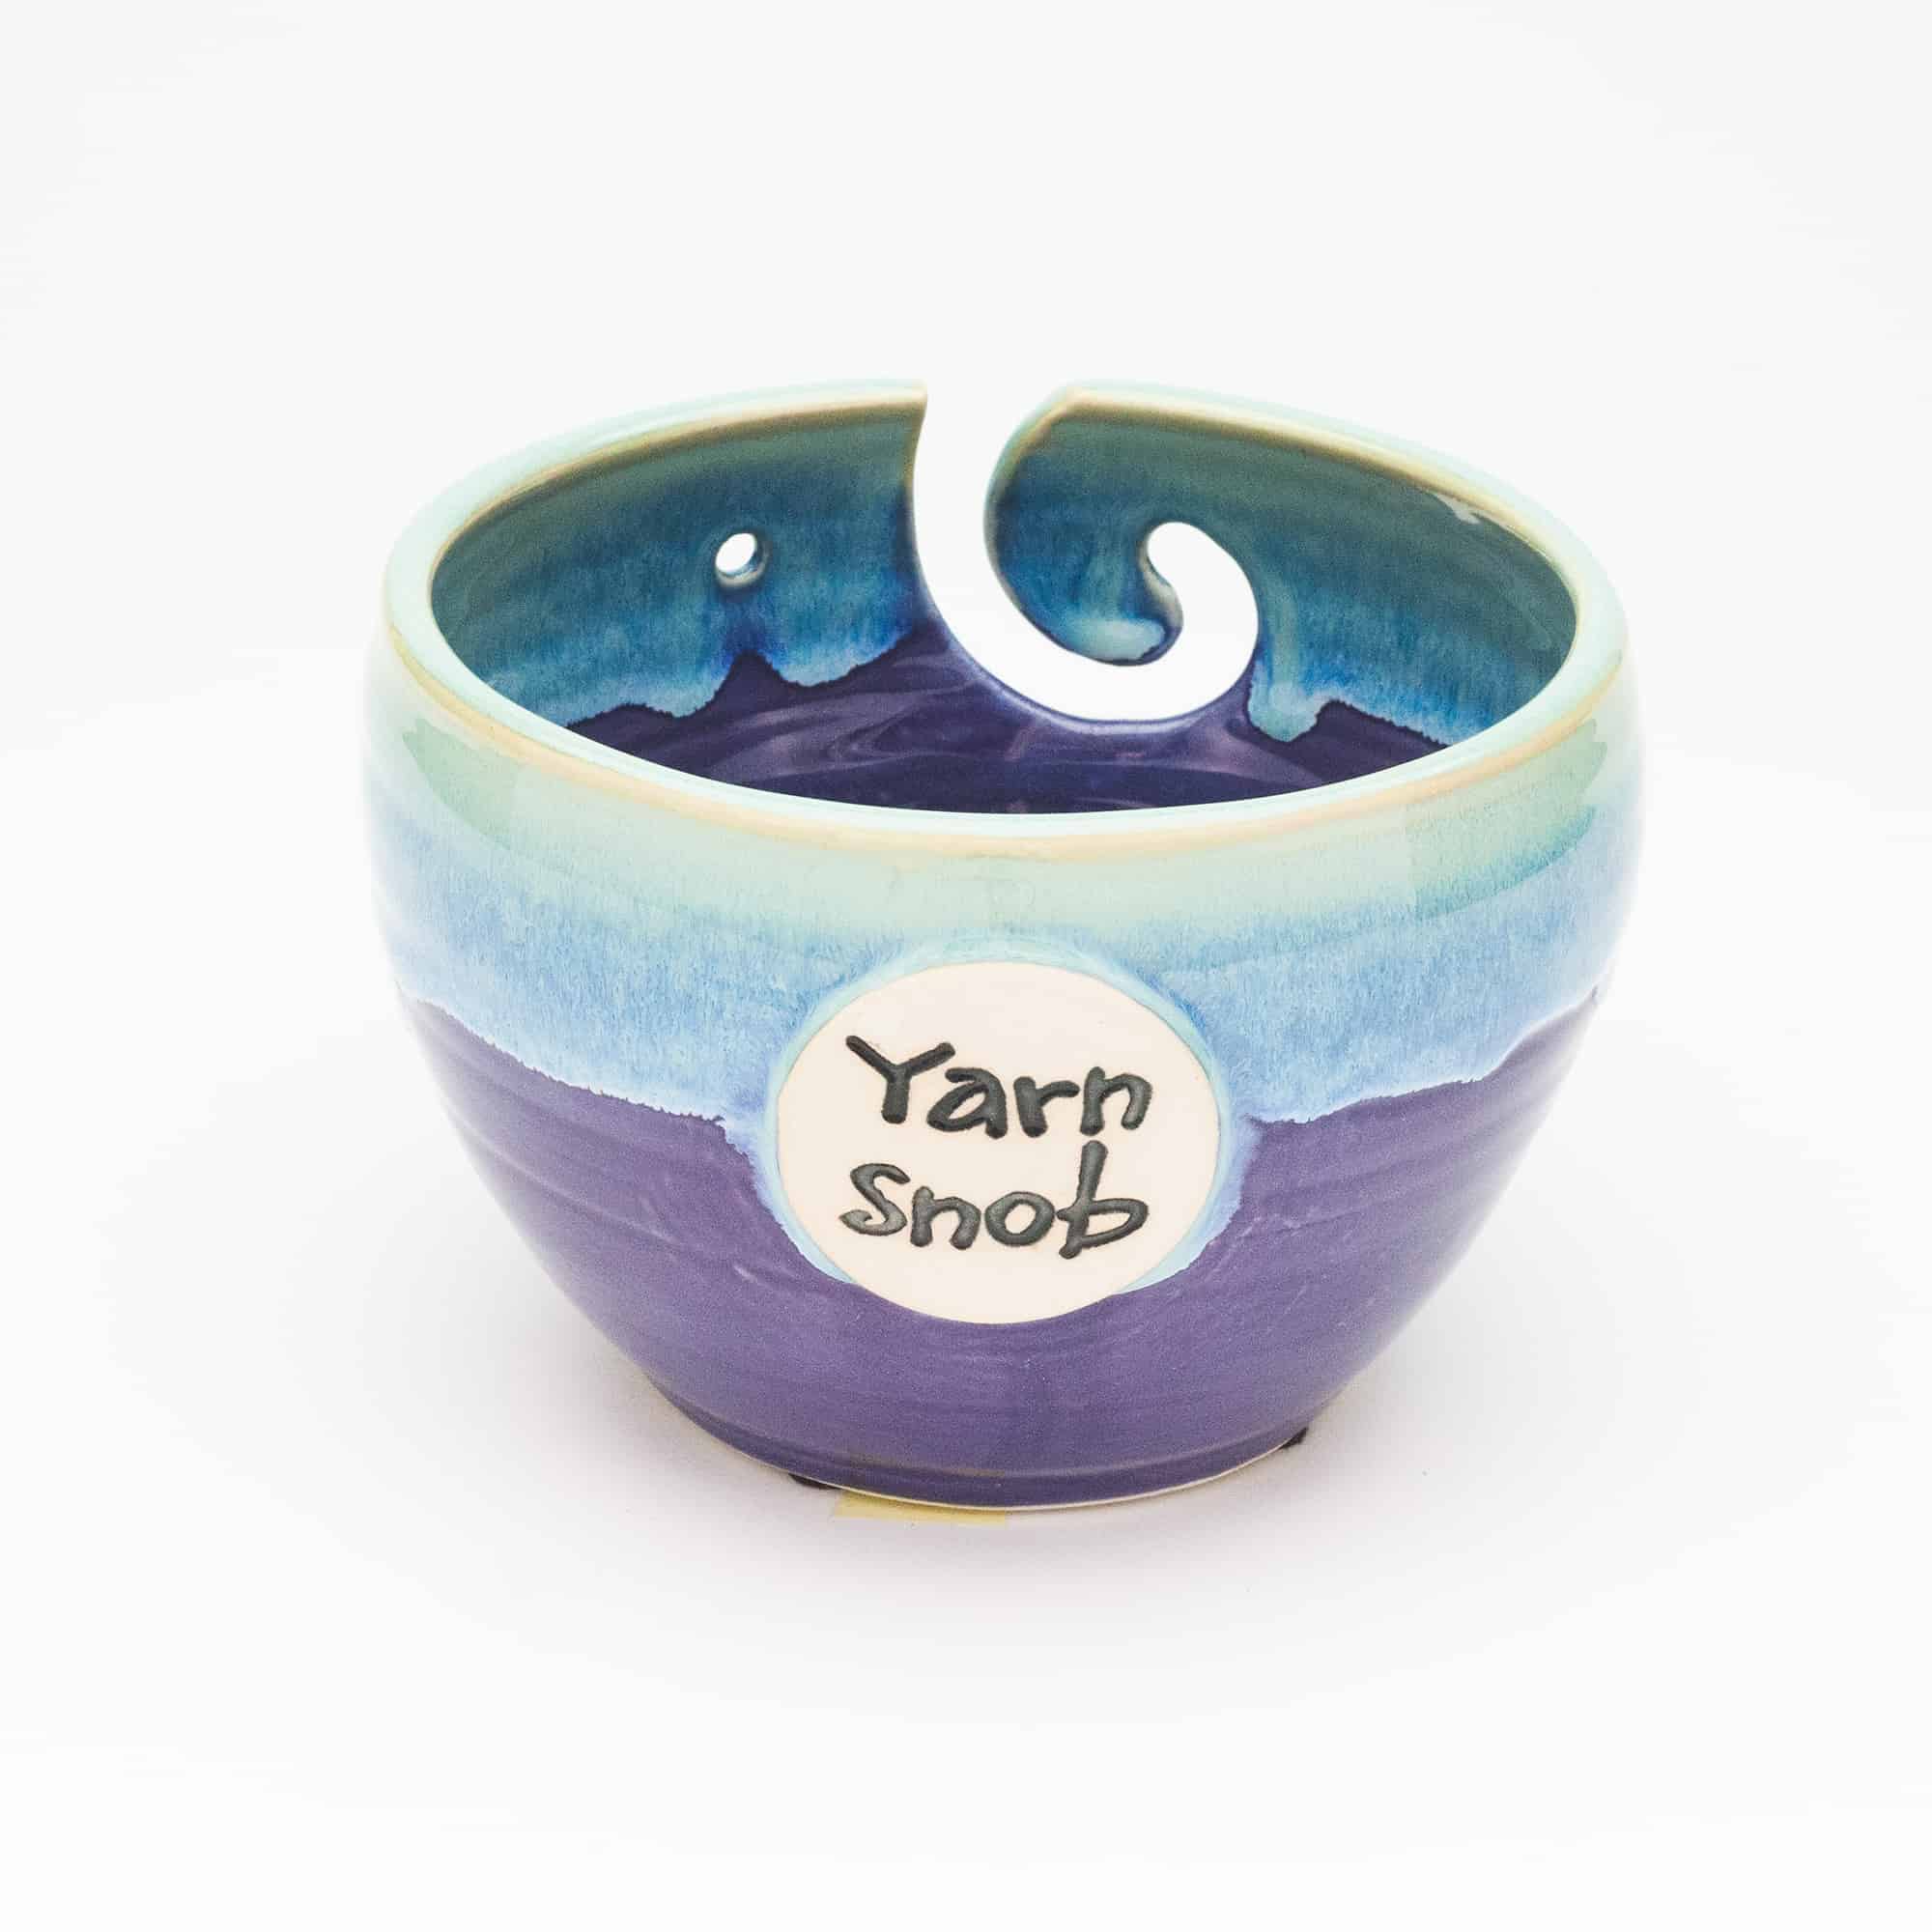 Yarn Bowl﻿ - The Cookie Snob